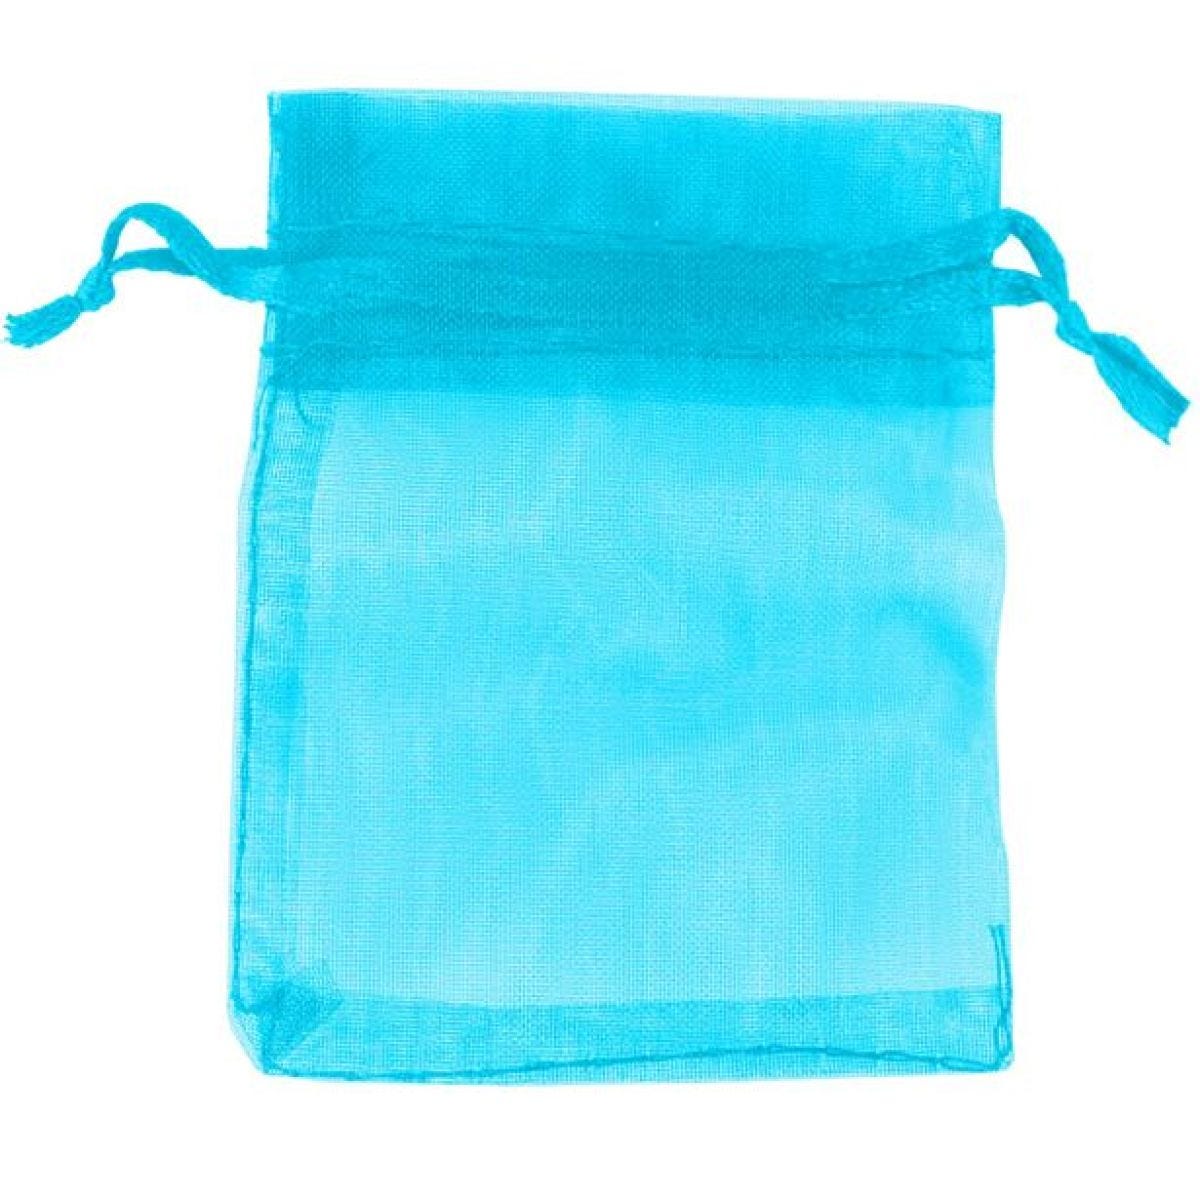 Turquoise Organza Bags - 10cm x 7cm